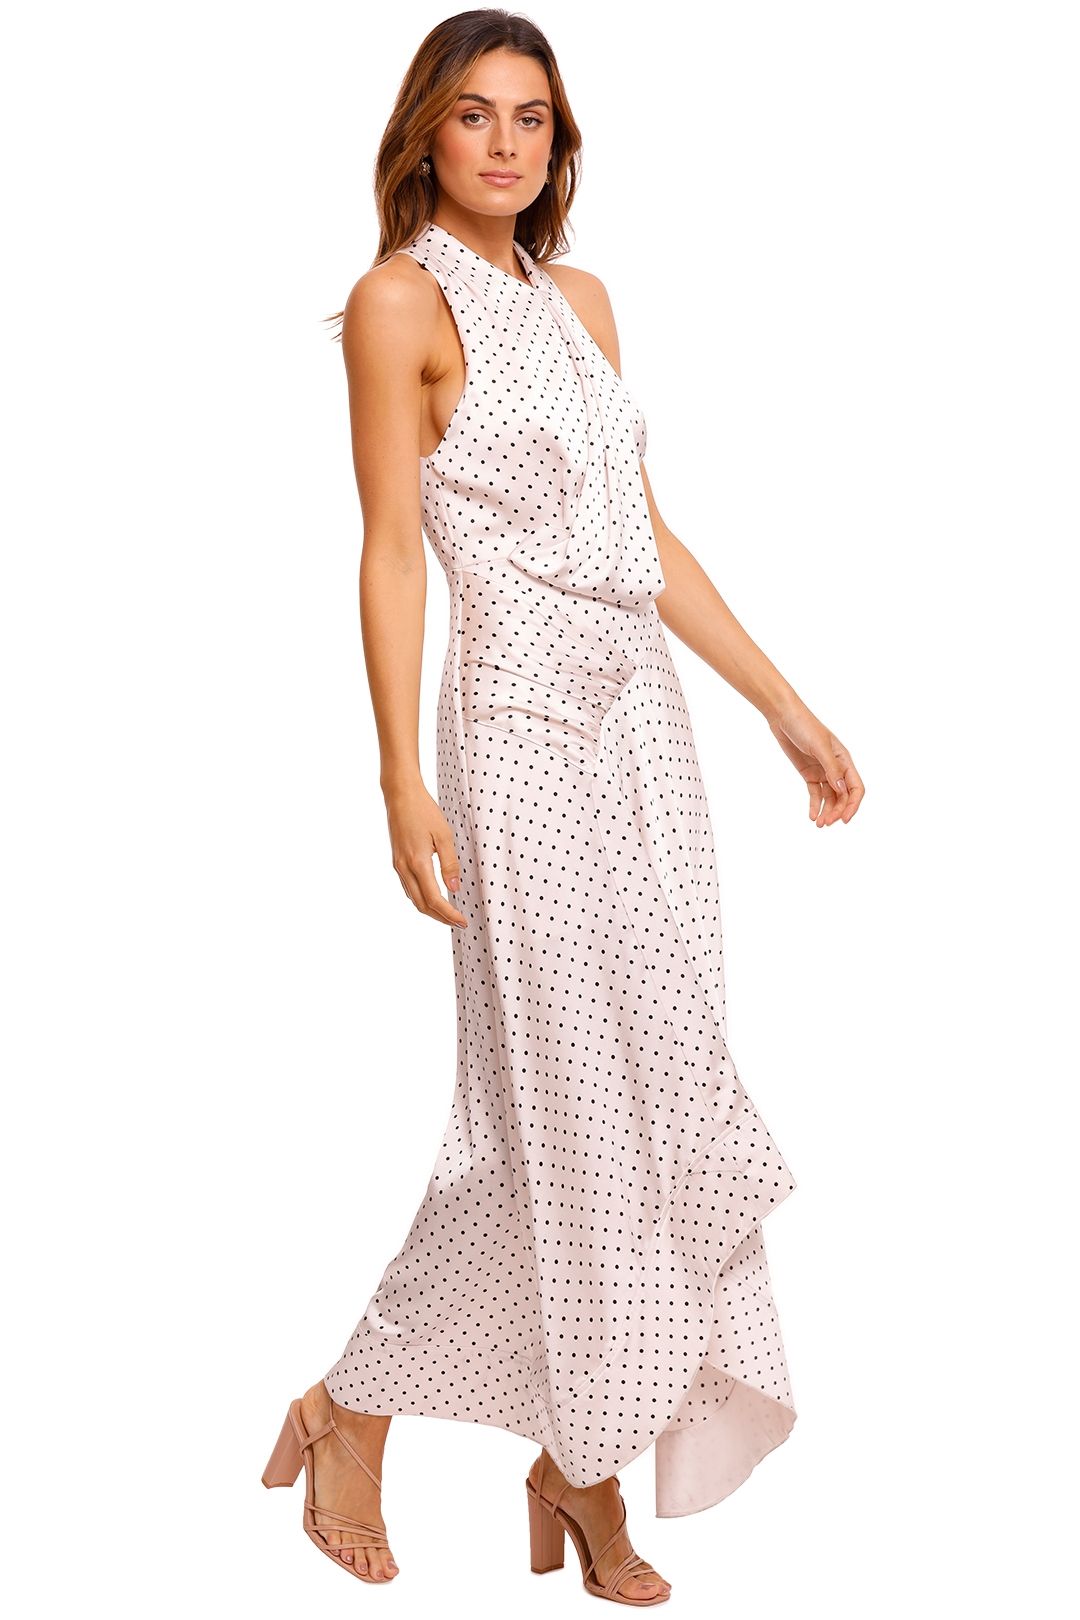 Acler Palmera Long Sleeveless Dress maxi asymmetric